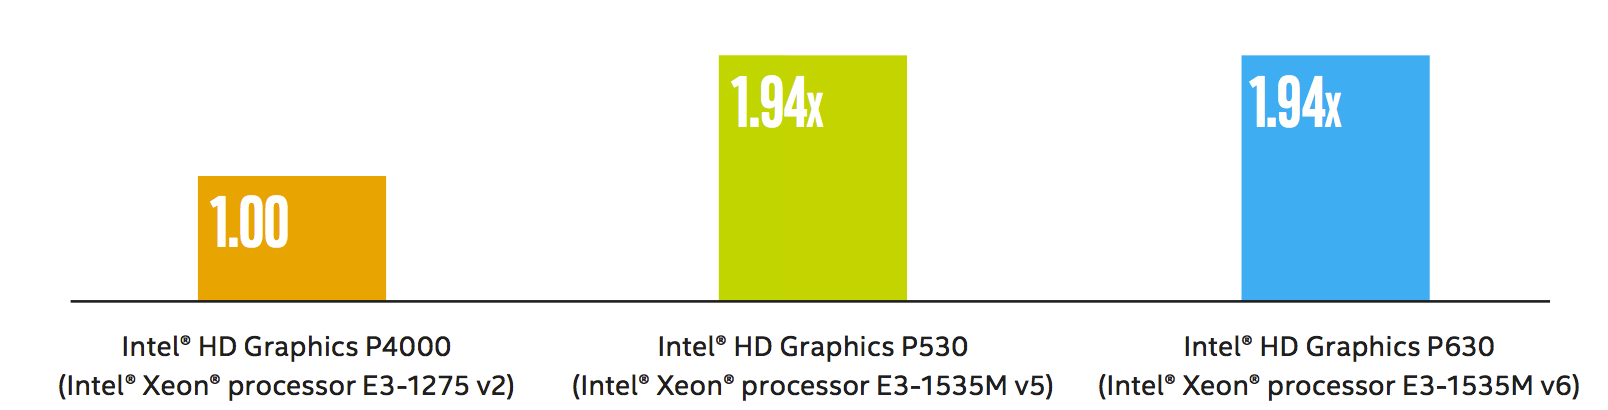 AMD Radeon 520 vs Intel Iris Plus 